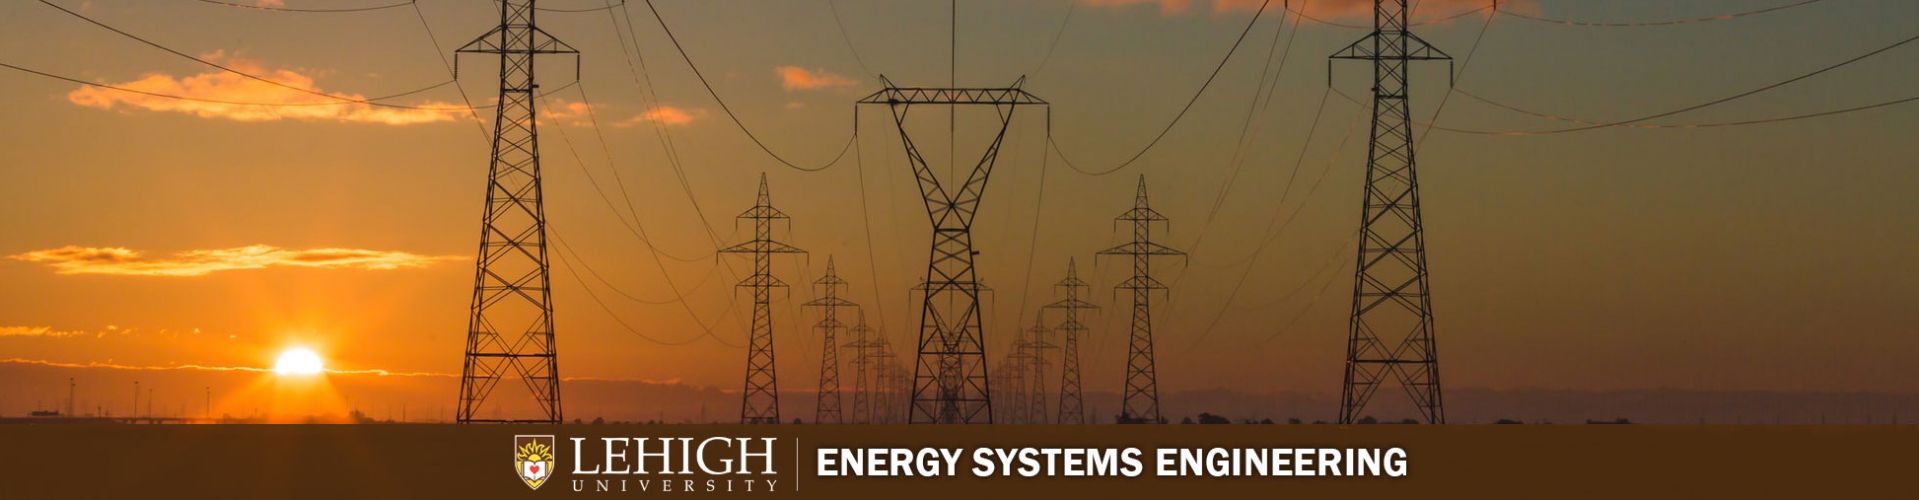 Energy Systems Engineering @ Lehigh University